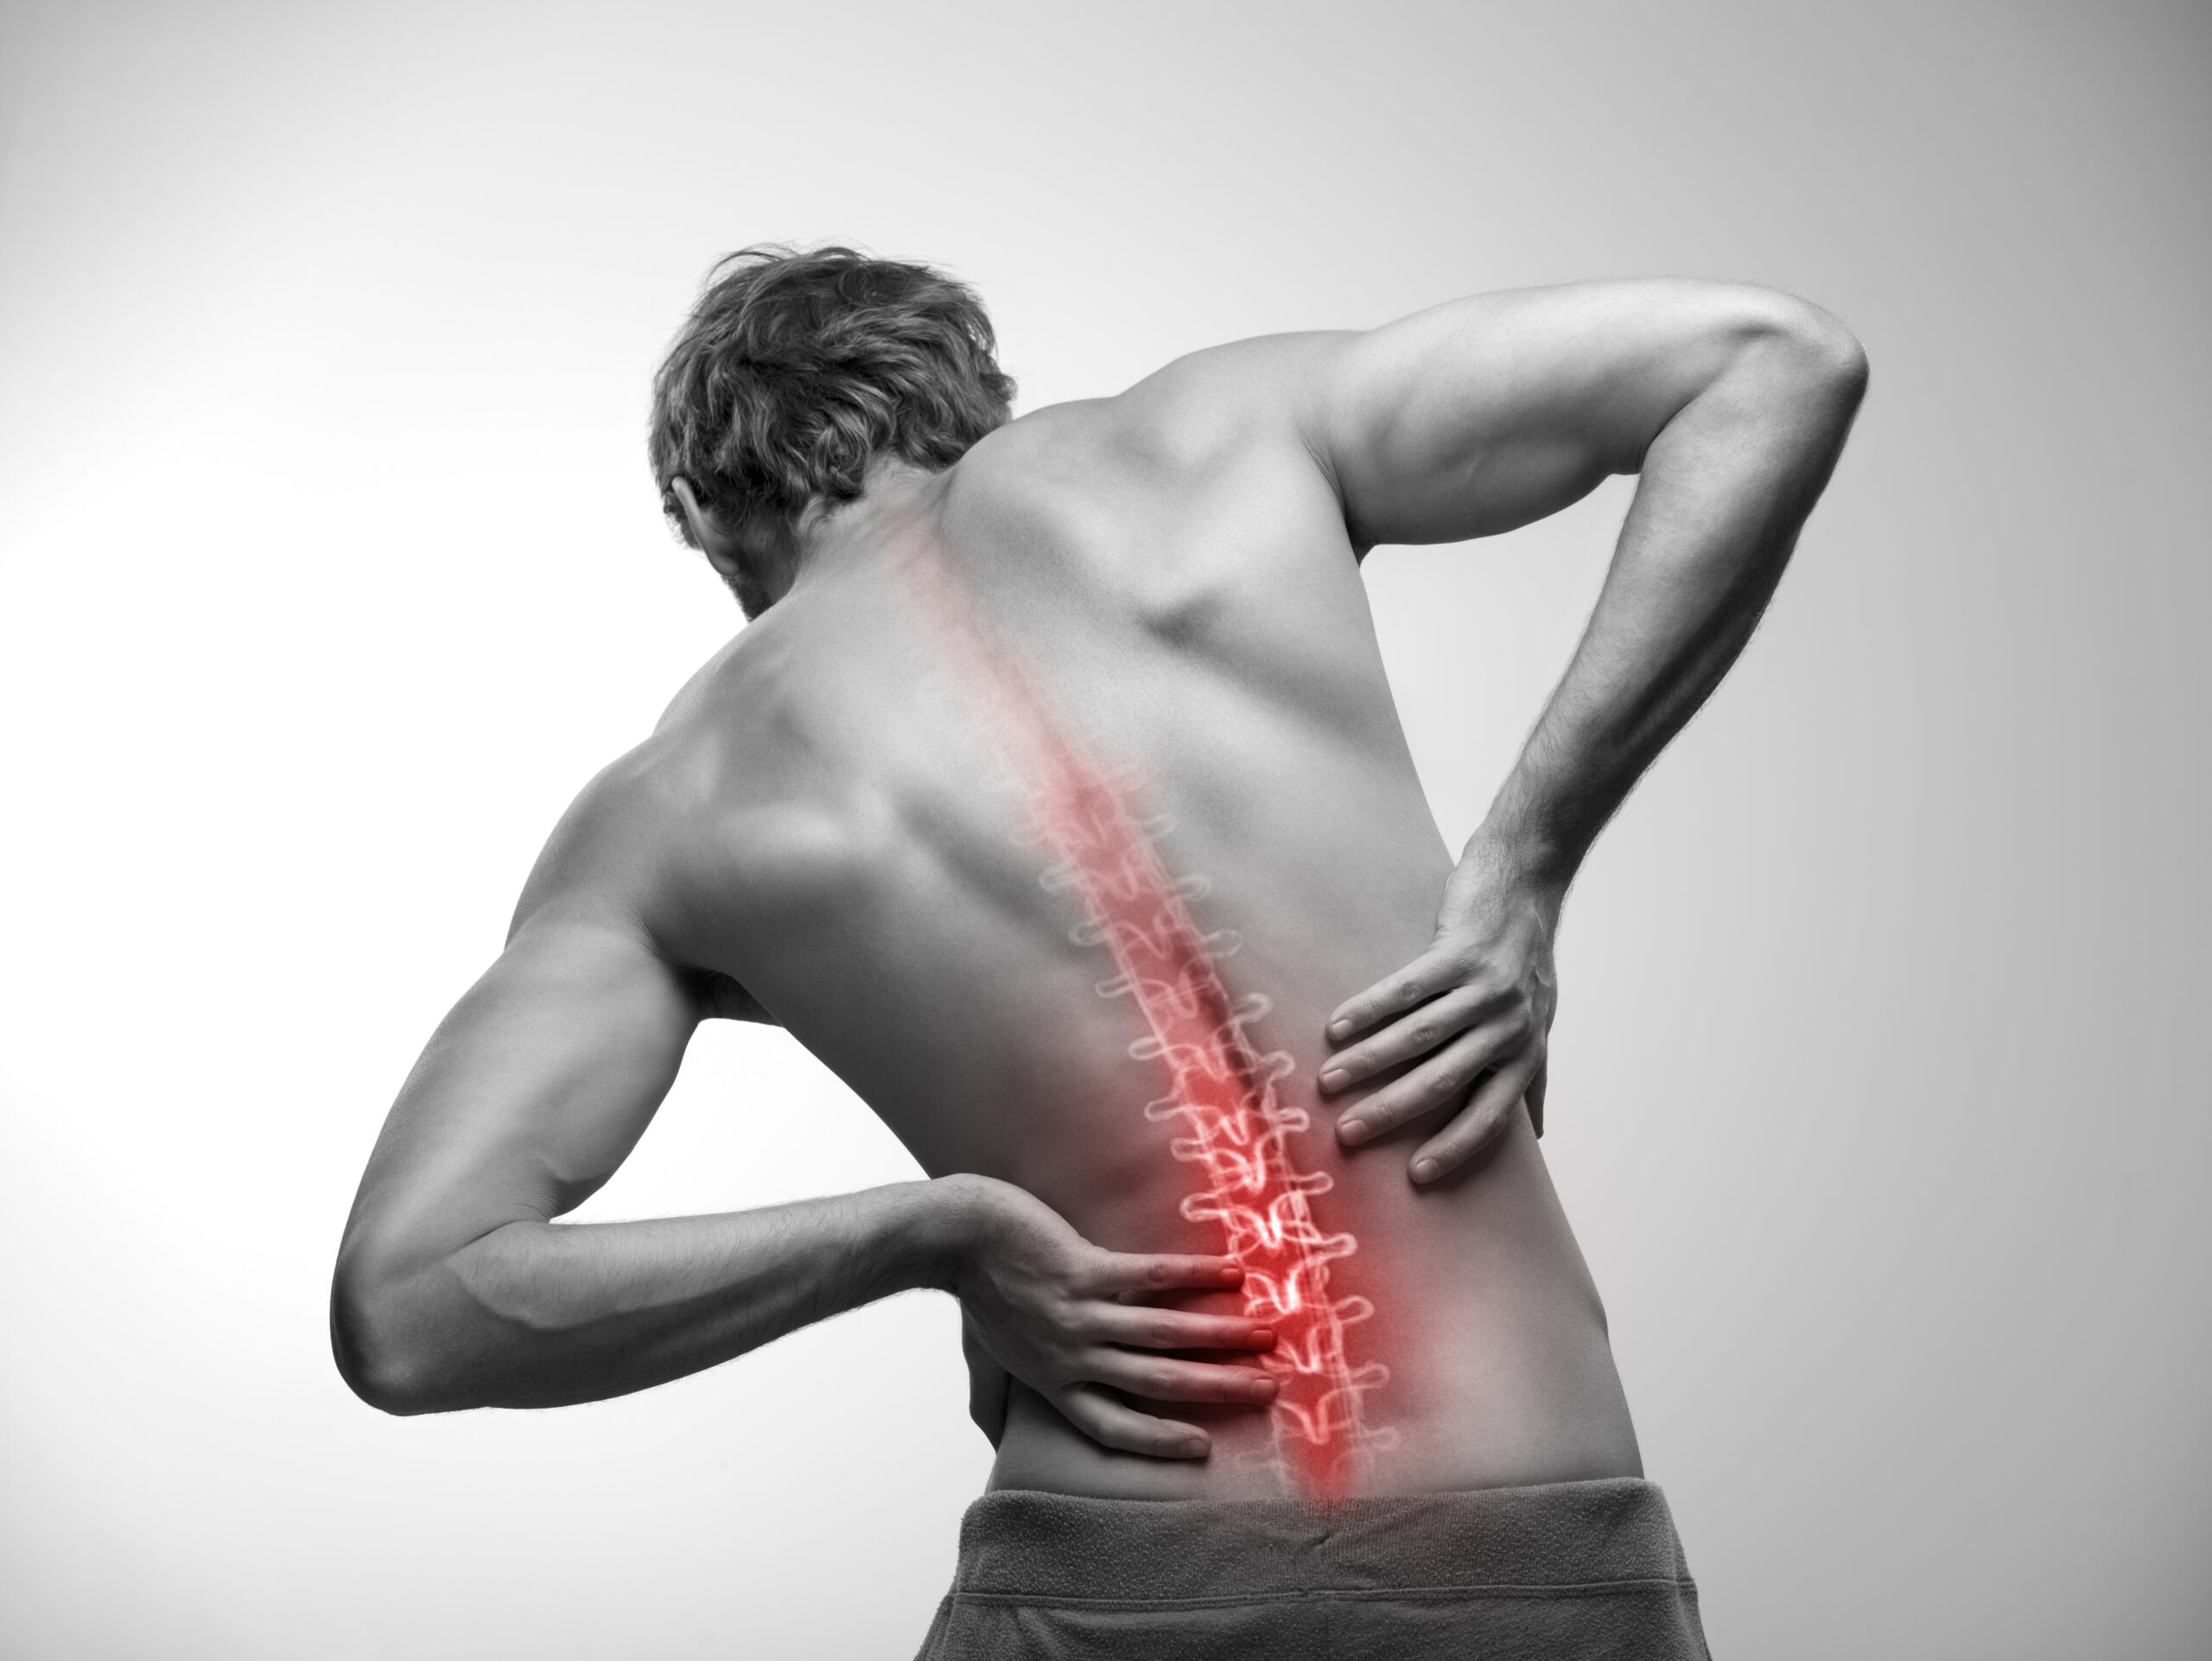 Good Posture for a Healthy Back Information